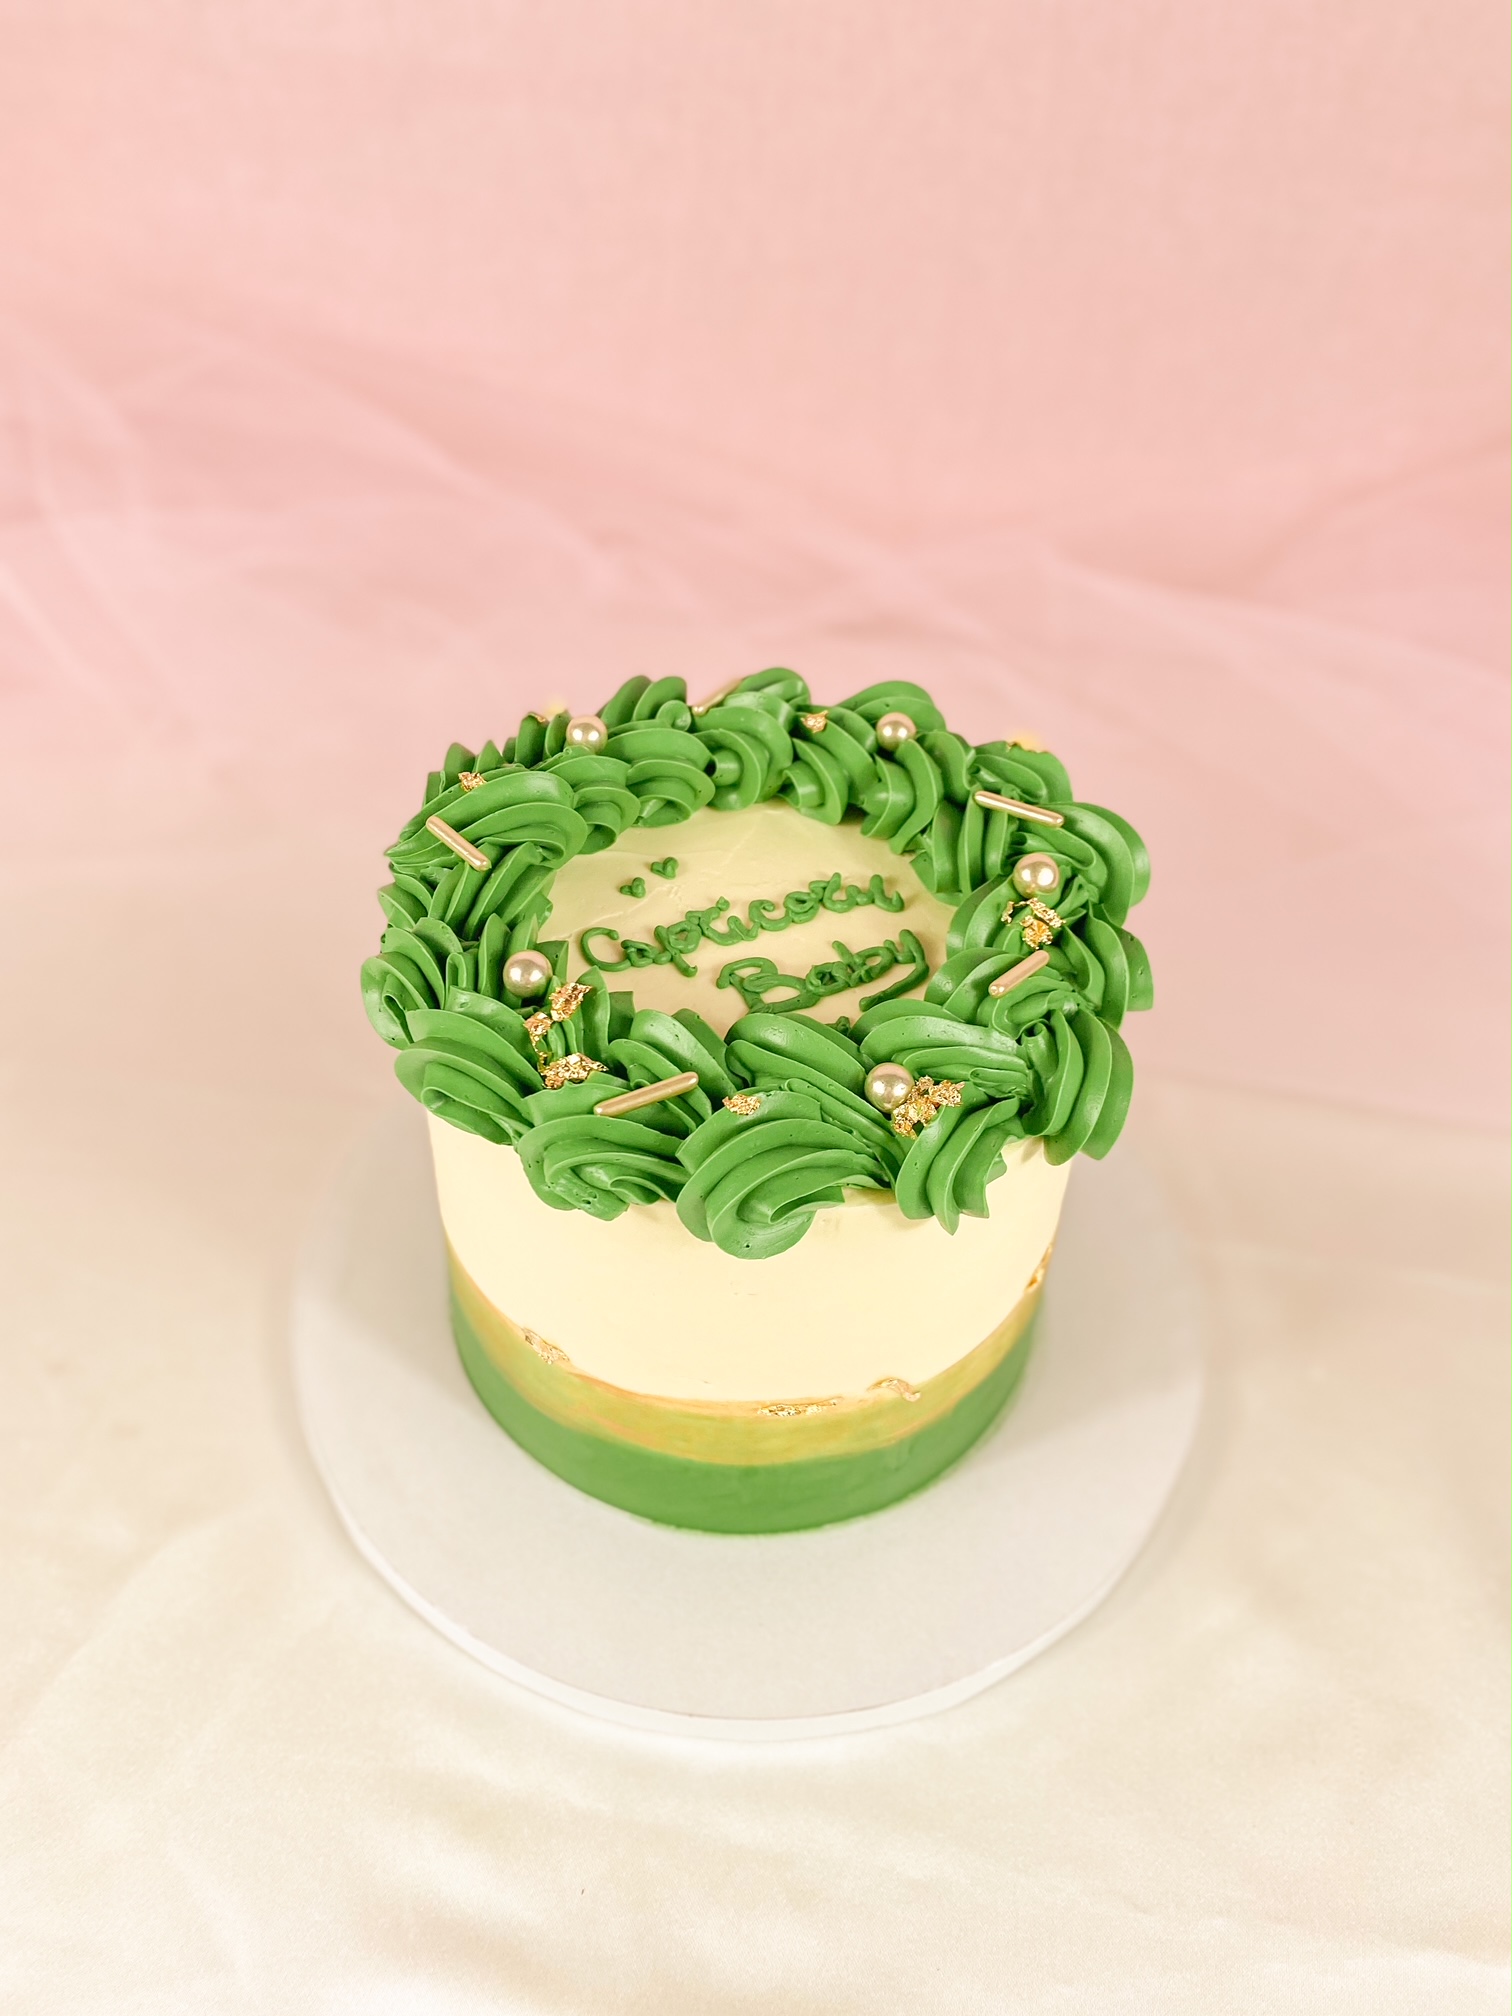 Bento Cake - Ugly Cake - Cake Design